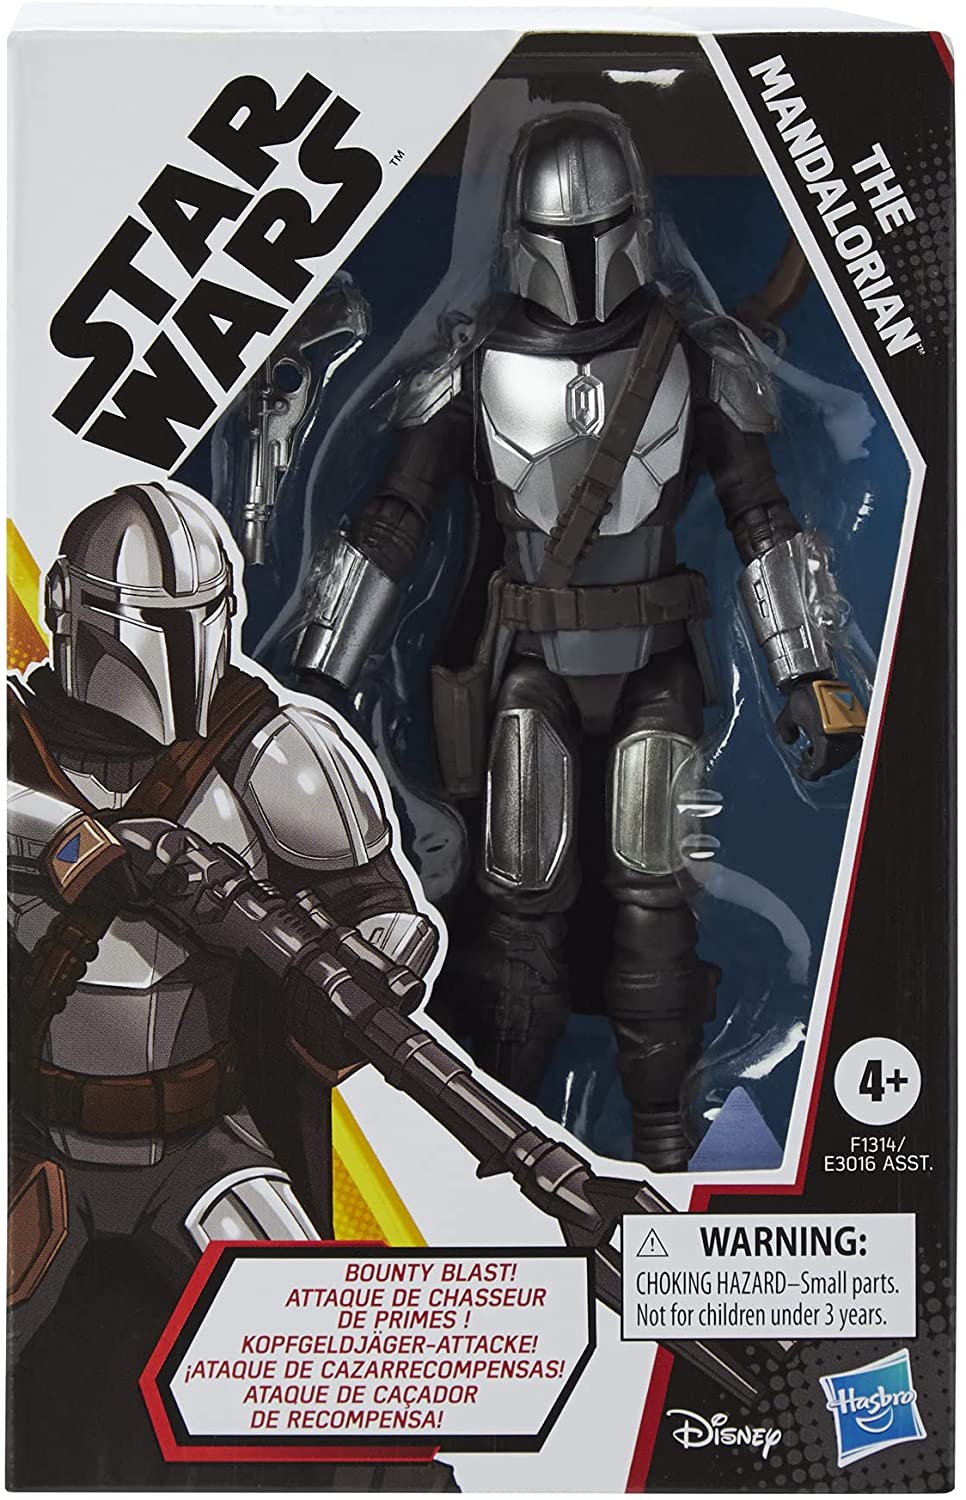 TM SWGOA Mando (Din Djarin) and Imperial Stormtrooper Figure 2-Pack 2